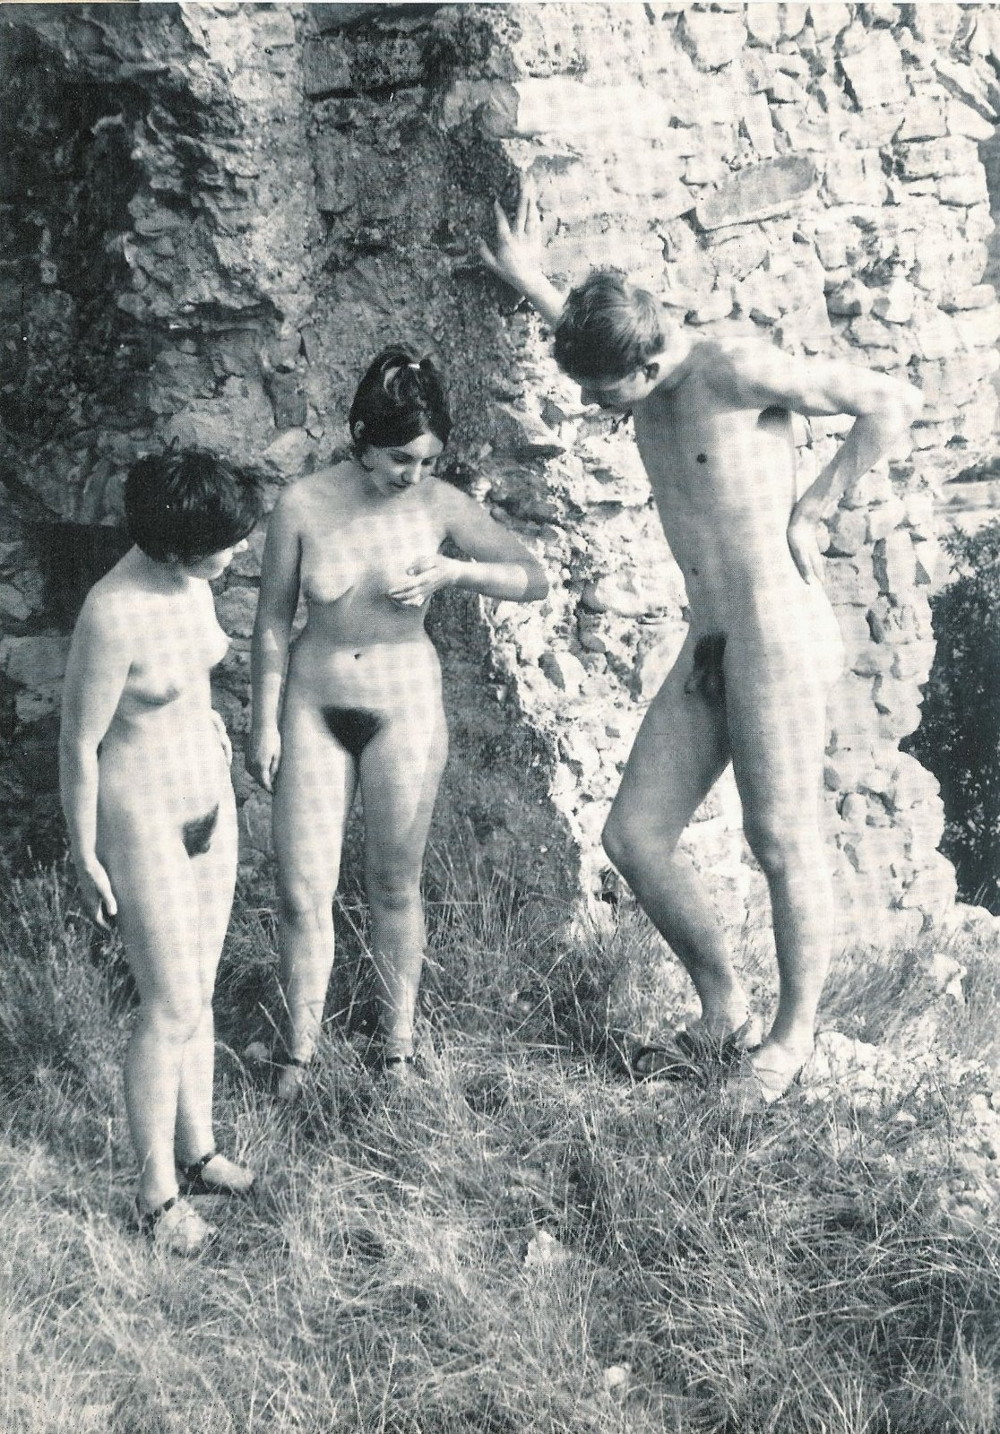 https://www.nudismlife.com/galleries/nudists_and_nude/nudist_cabana/nudist_cabana_971.jpg